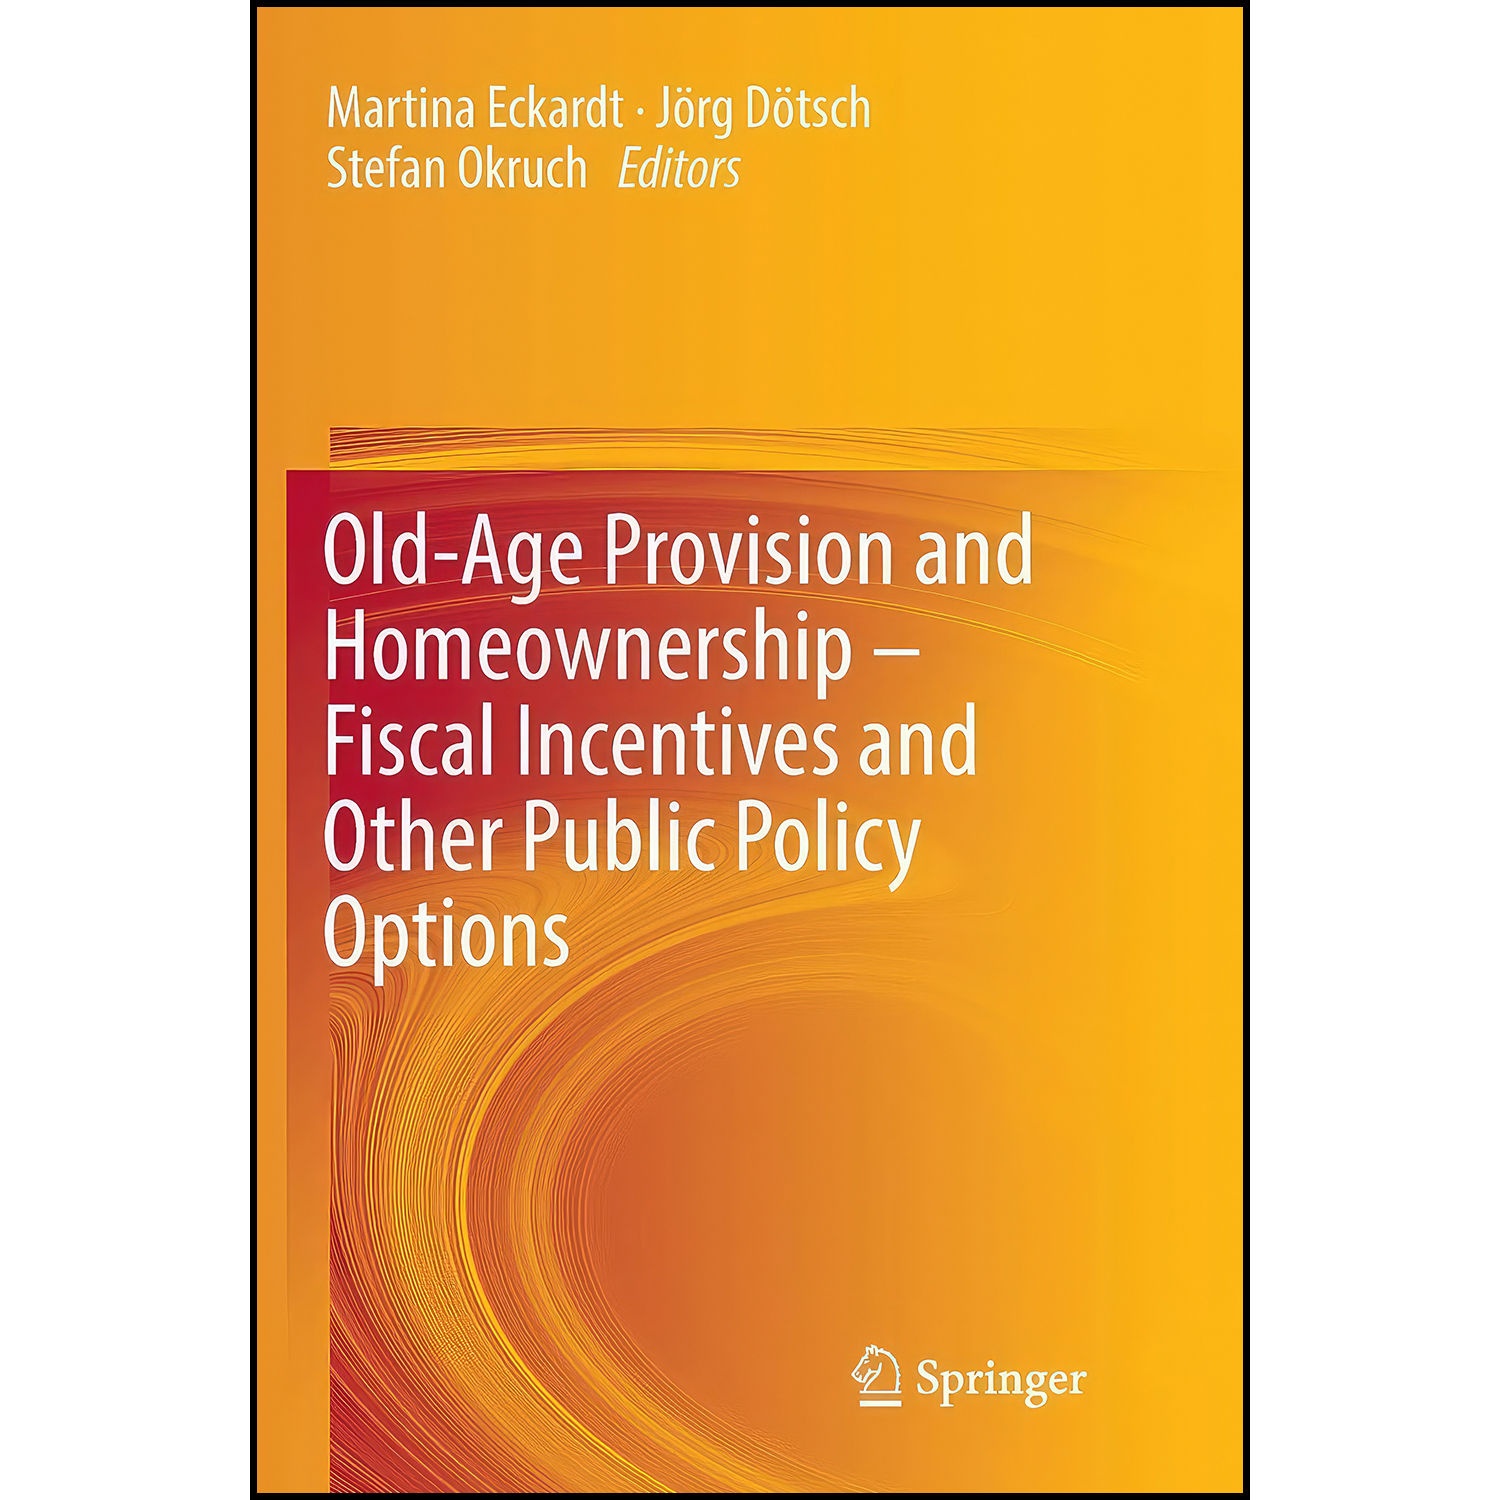 کتاب Old-Age Provision and Homeownership – Fiscal Incentives and Other Public Policy Options اثر جمعي از نويسندگان انتشارات بله